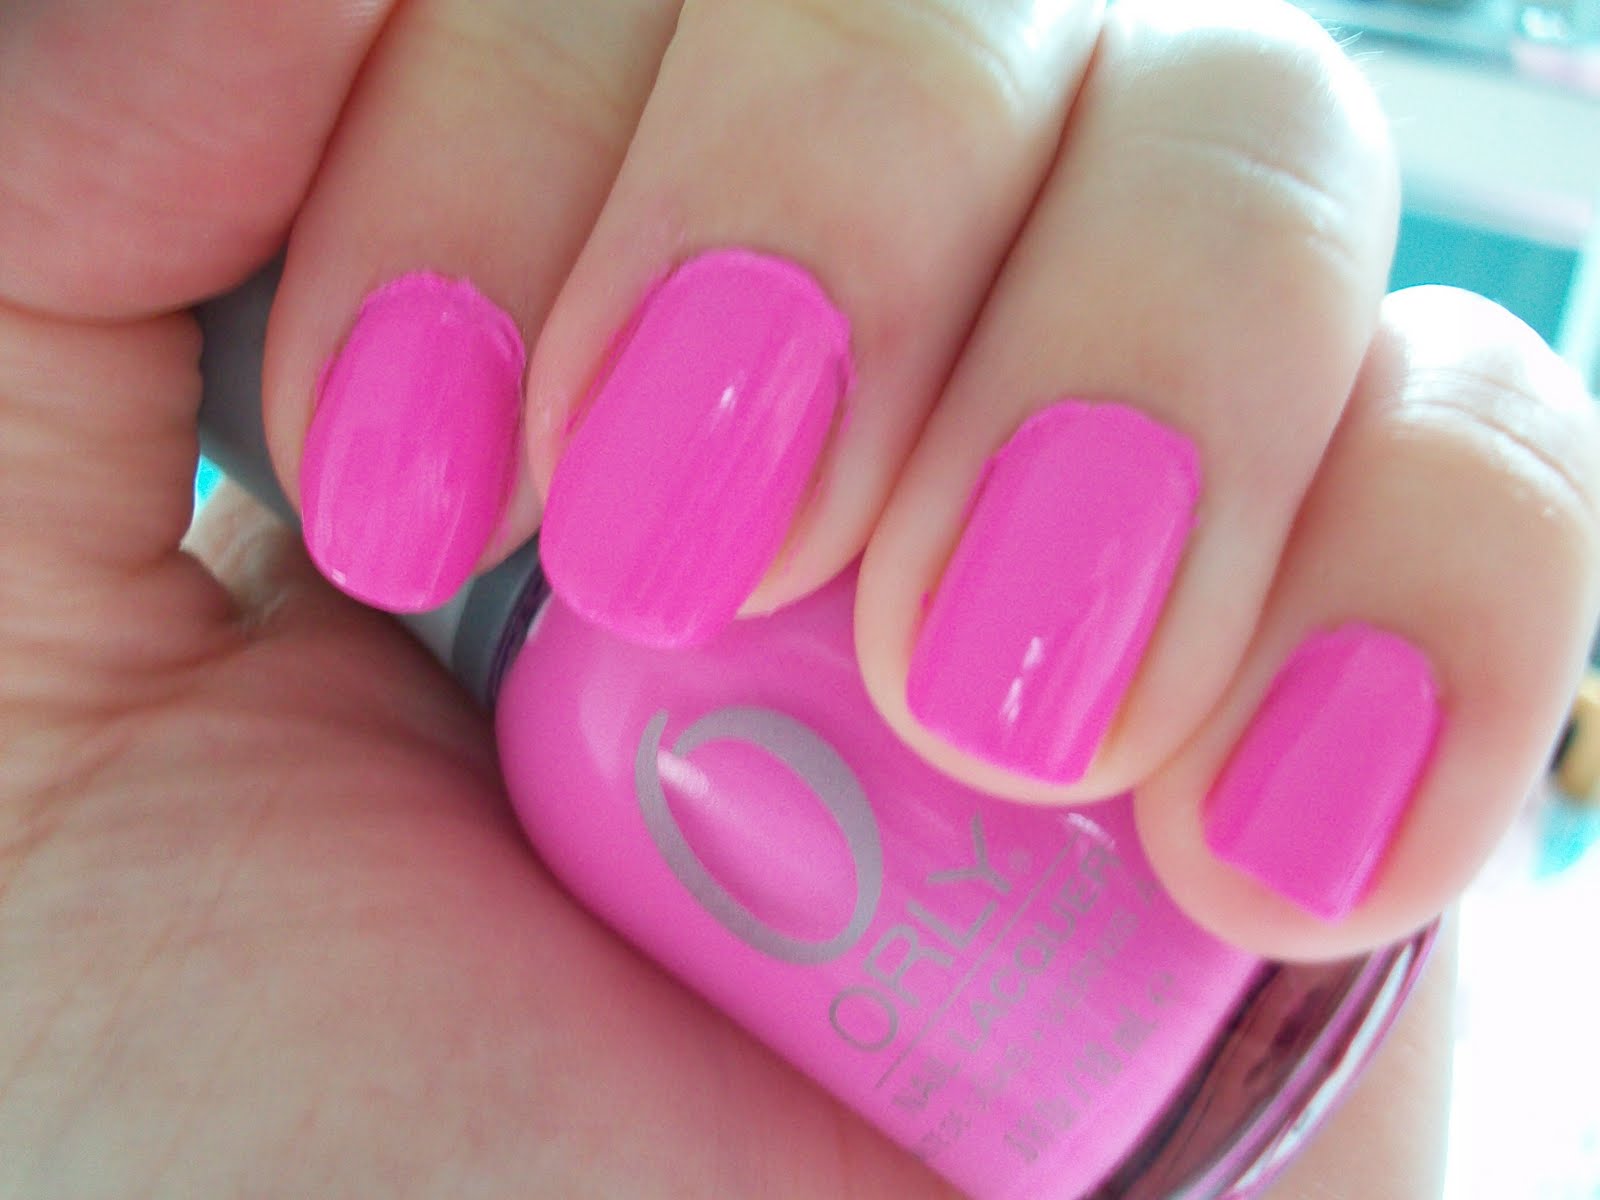 great nail polish color for summer